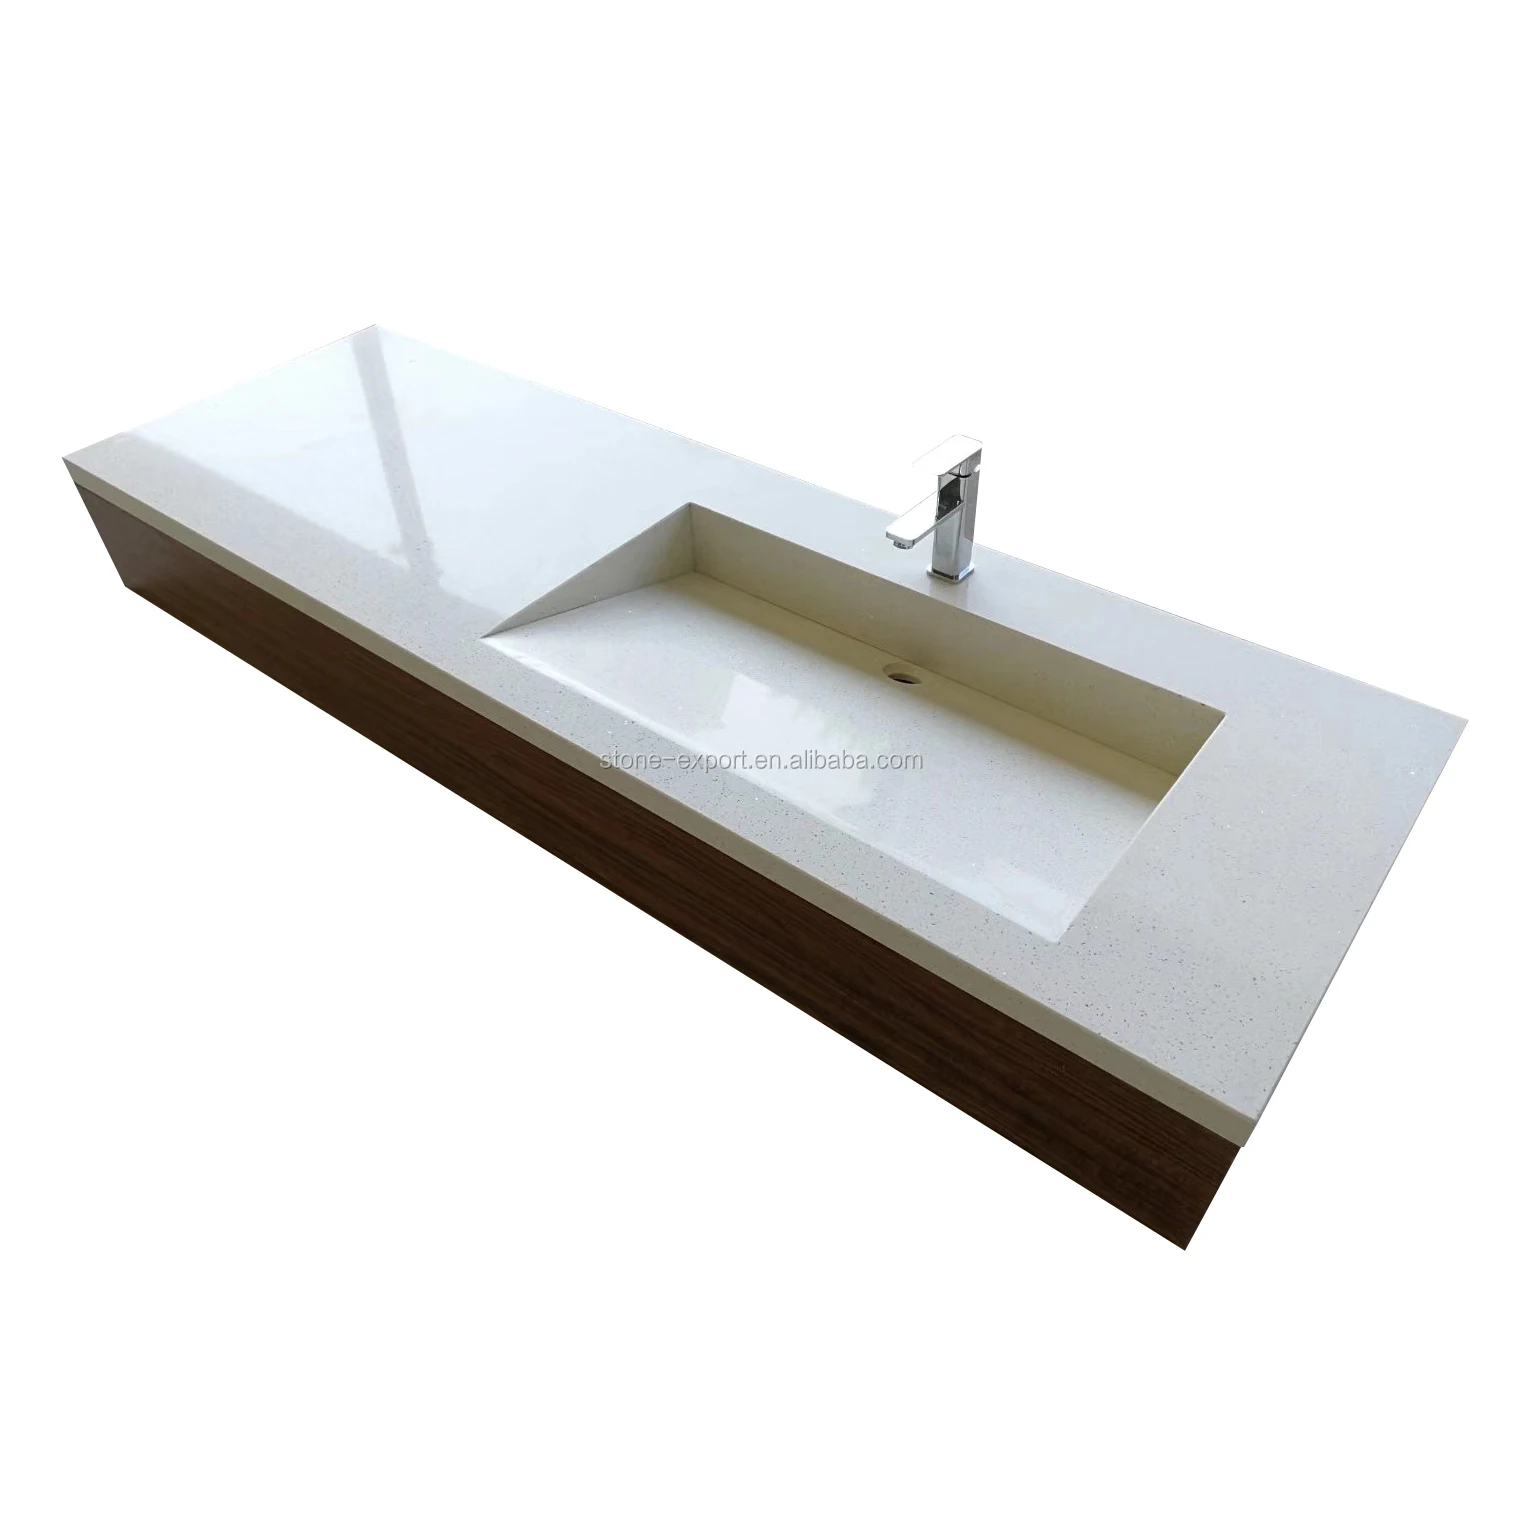 White Crystal Quartz Stone Molded Sink Vanity Top Acrylic Bathroom Flat Vanity Tops High Quality Integral Basin Buy Quartz Stone Molded Sink Vanity Top